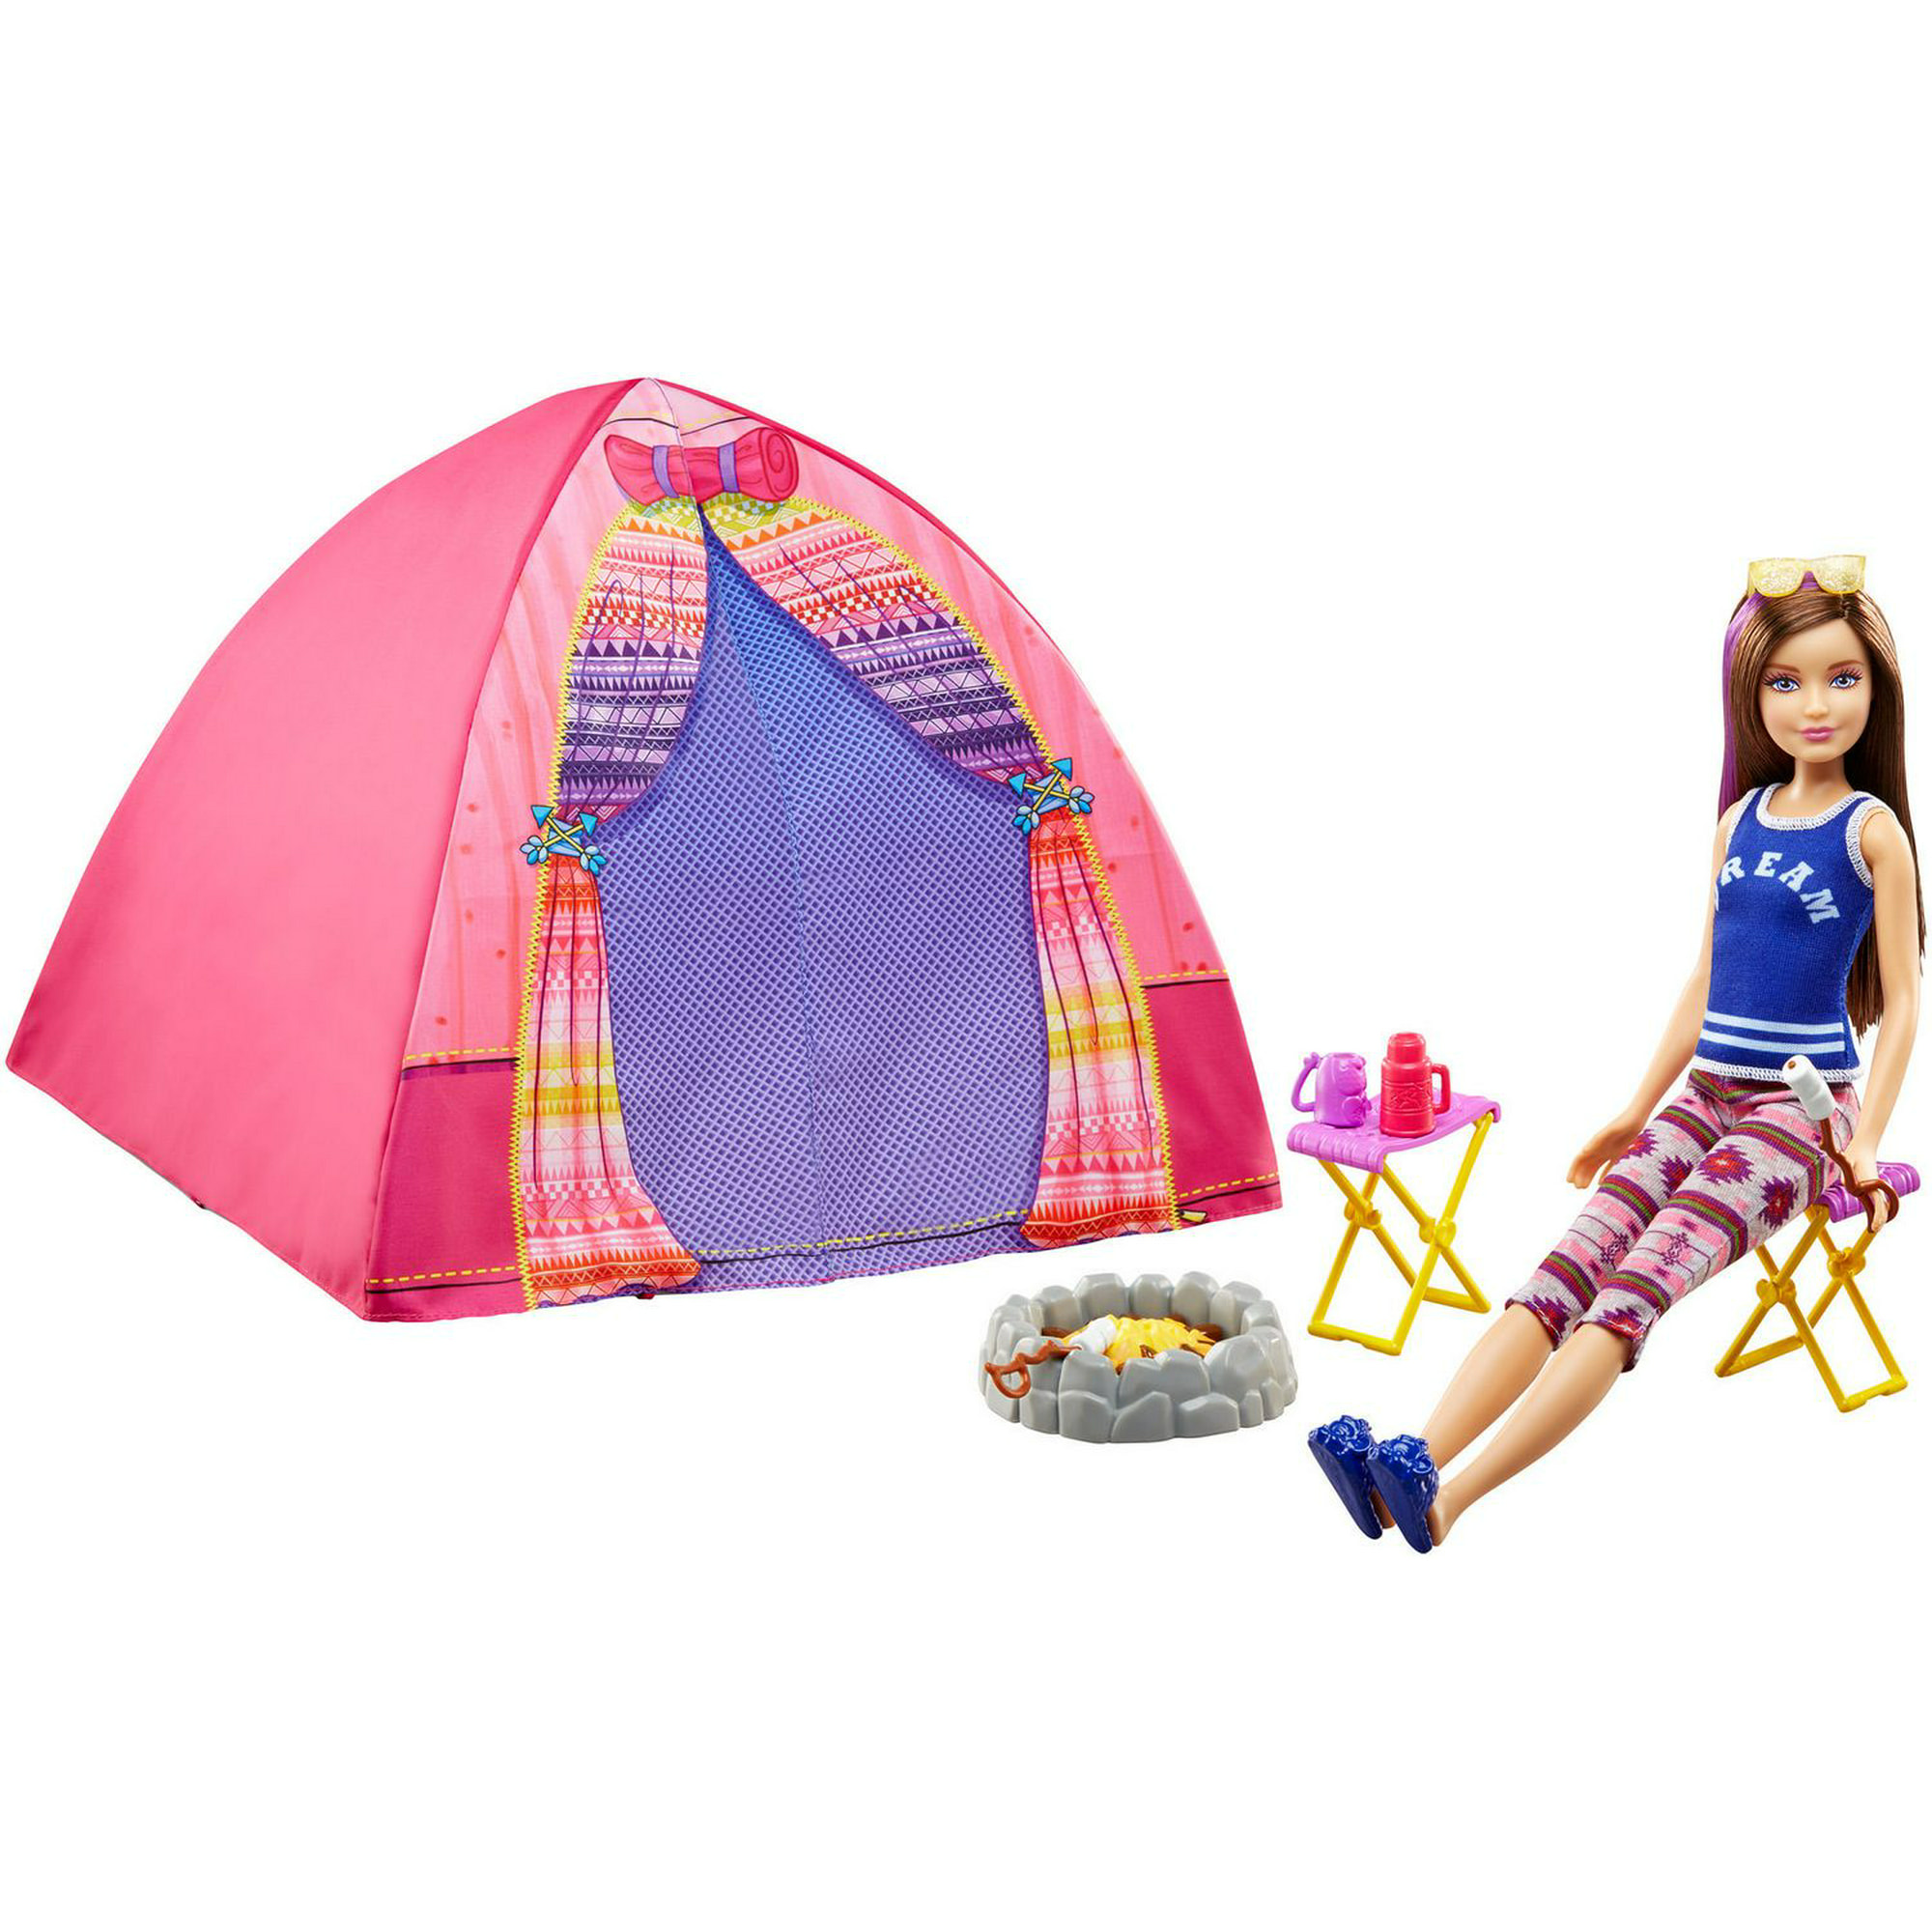 Barbie Camping Fun Accessory Pack Fishing Pole Binoculars Compass Stool New